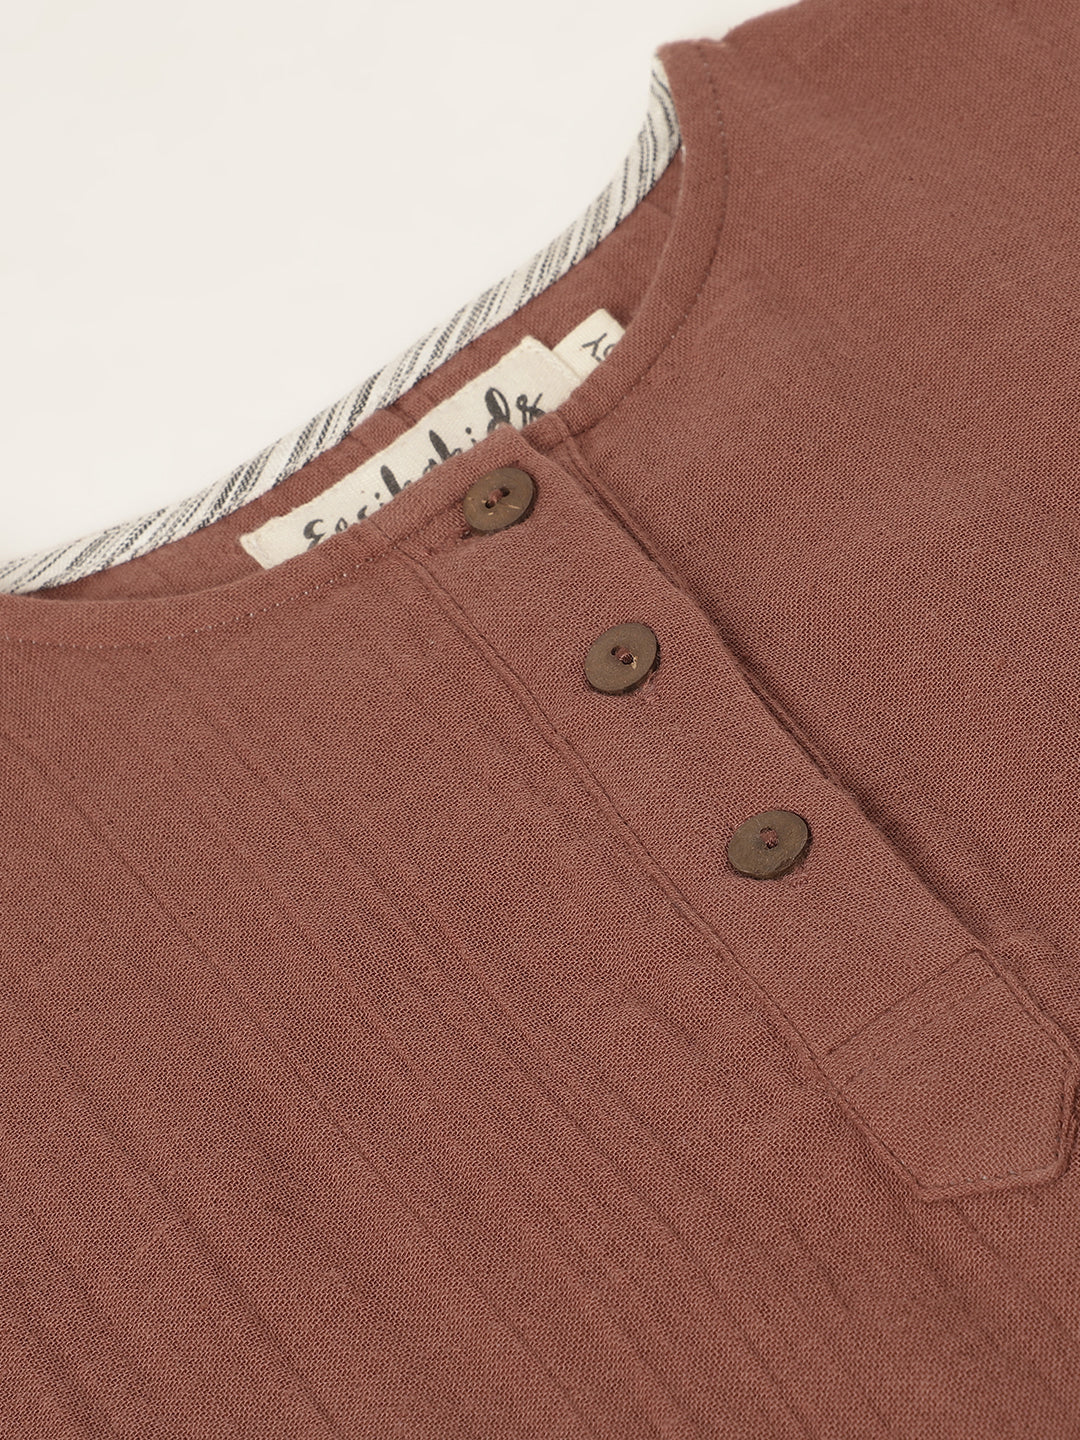 Boys Cotton Rust Brown Shirt | 1 Yr to 8 Yrs - Close-up